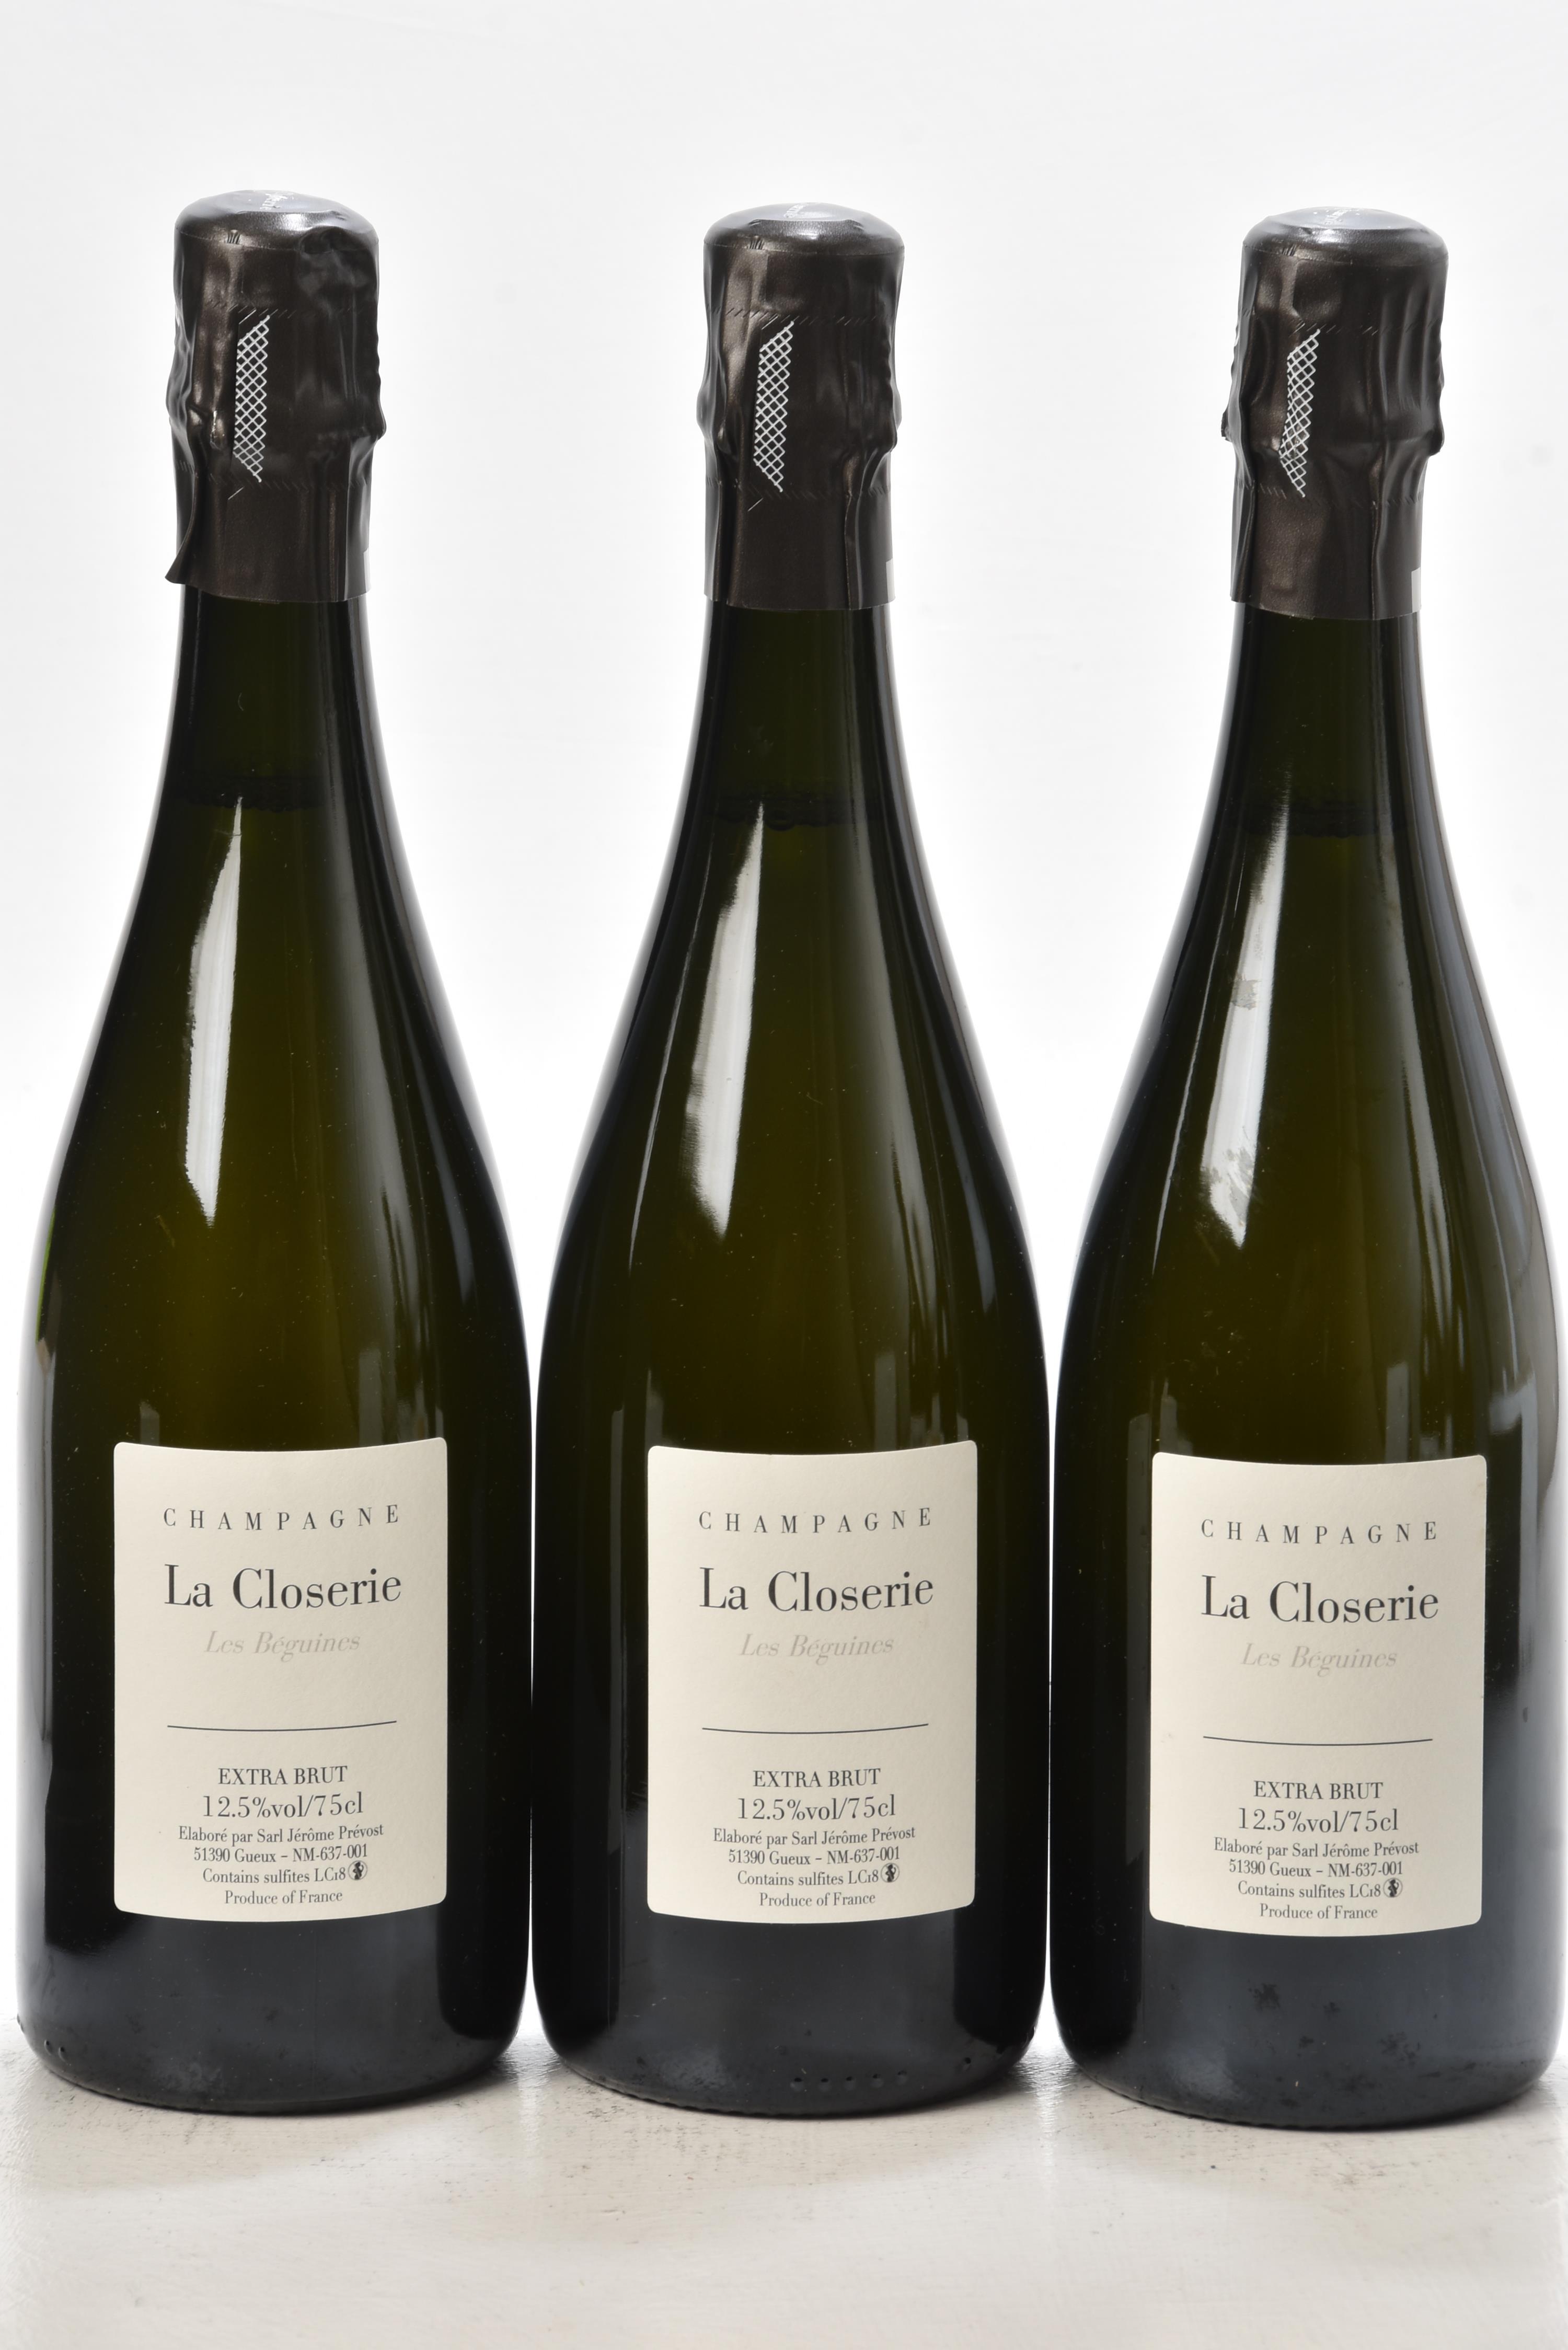 Champagne Les Beguines LC18 La Closerie NV Jerome Prevost 3 bts In Bond - Image 2 of 2